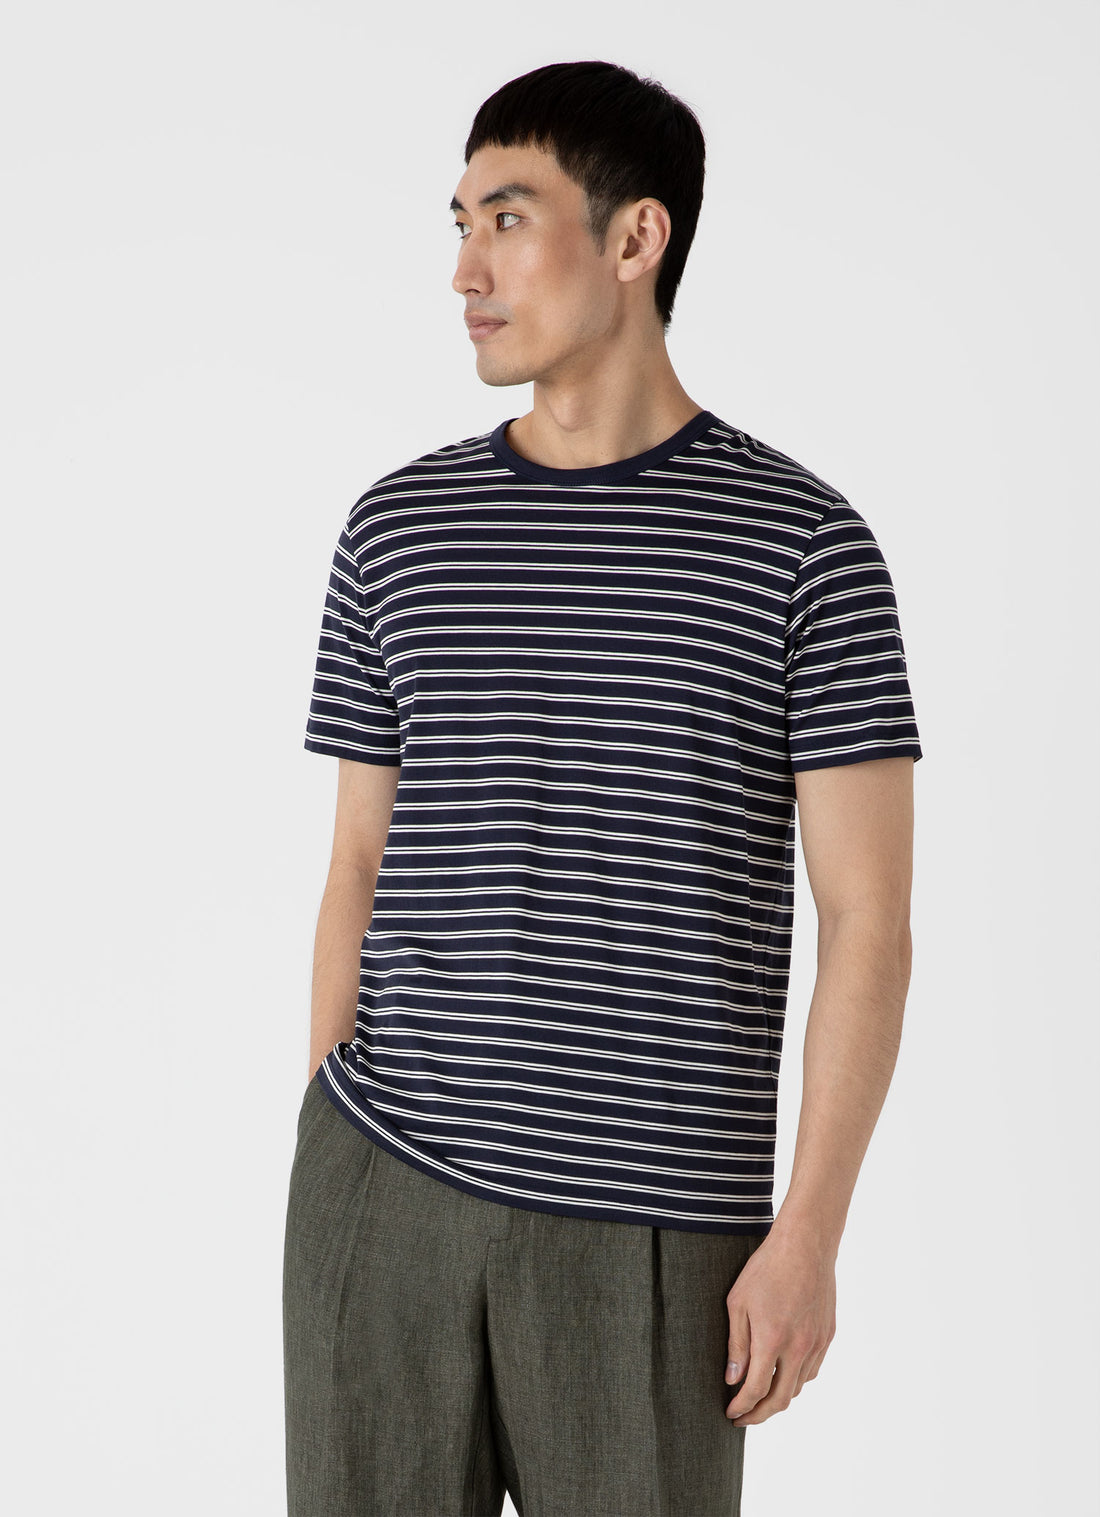 Men's Classic T-shirt in Navy/Ecru Tramline Stripe